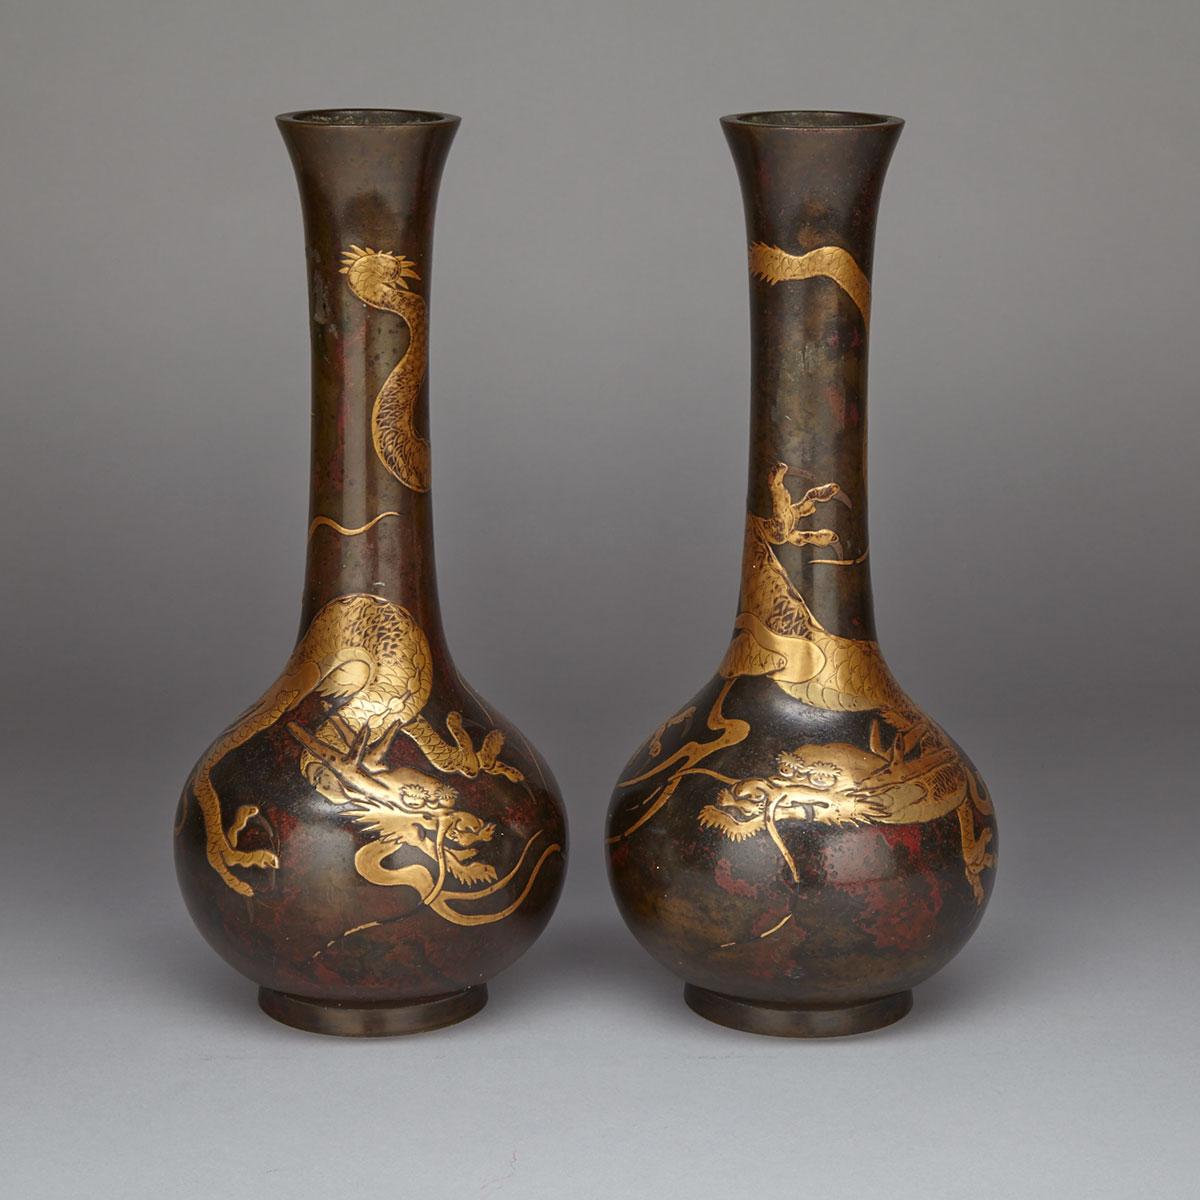 Pair of Japanese Parcel Gilt Bronze Bottle Vases, Meiji Period, 19th century